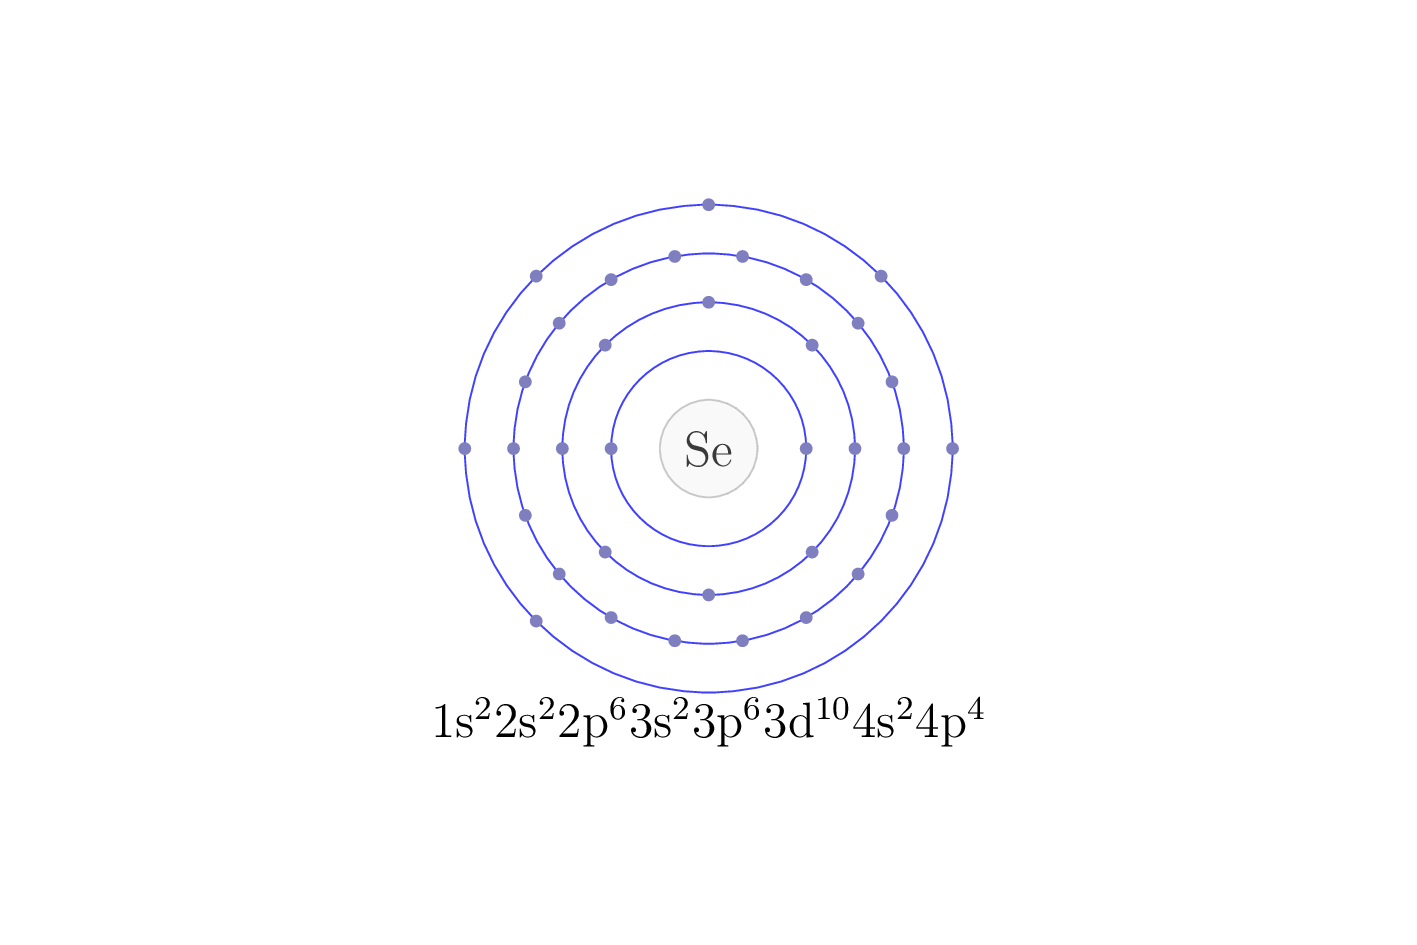 electron configuration of element Se